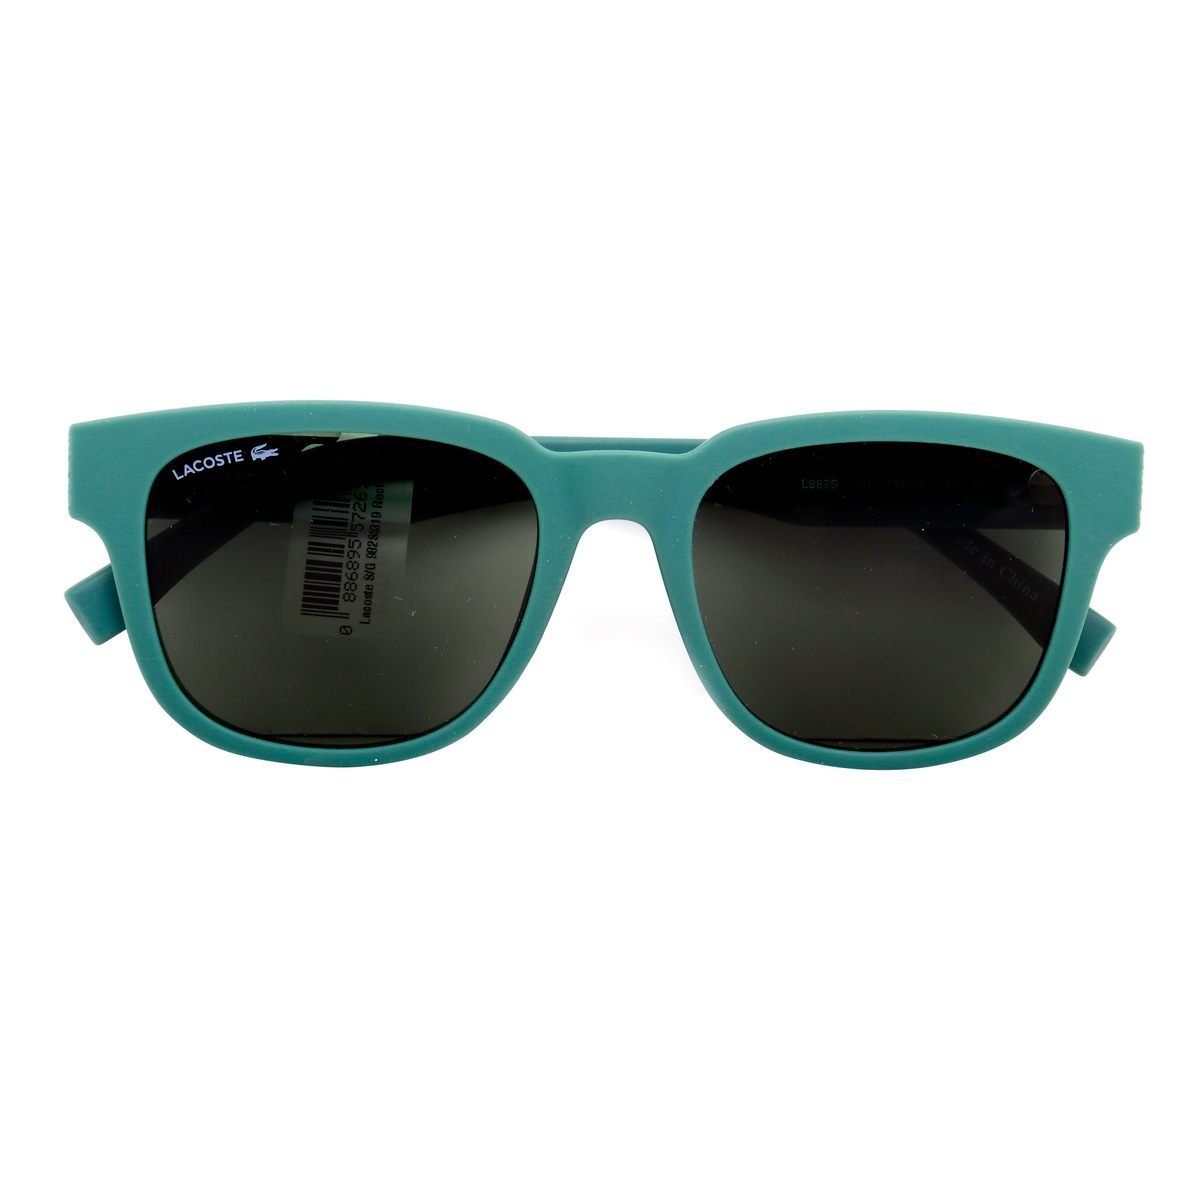 Lacoste Men's Rectangle Sunglasses, Green, 982S5319